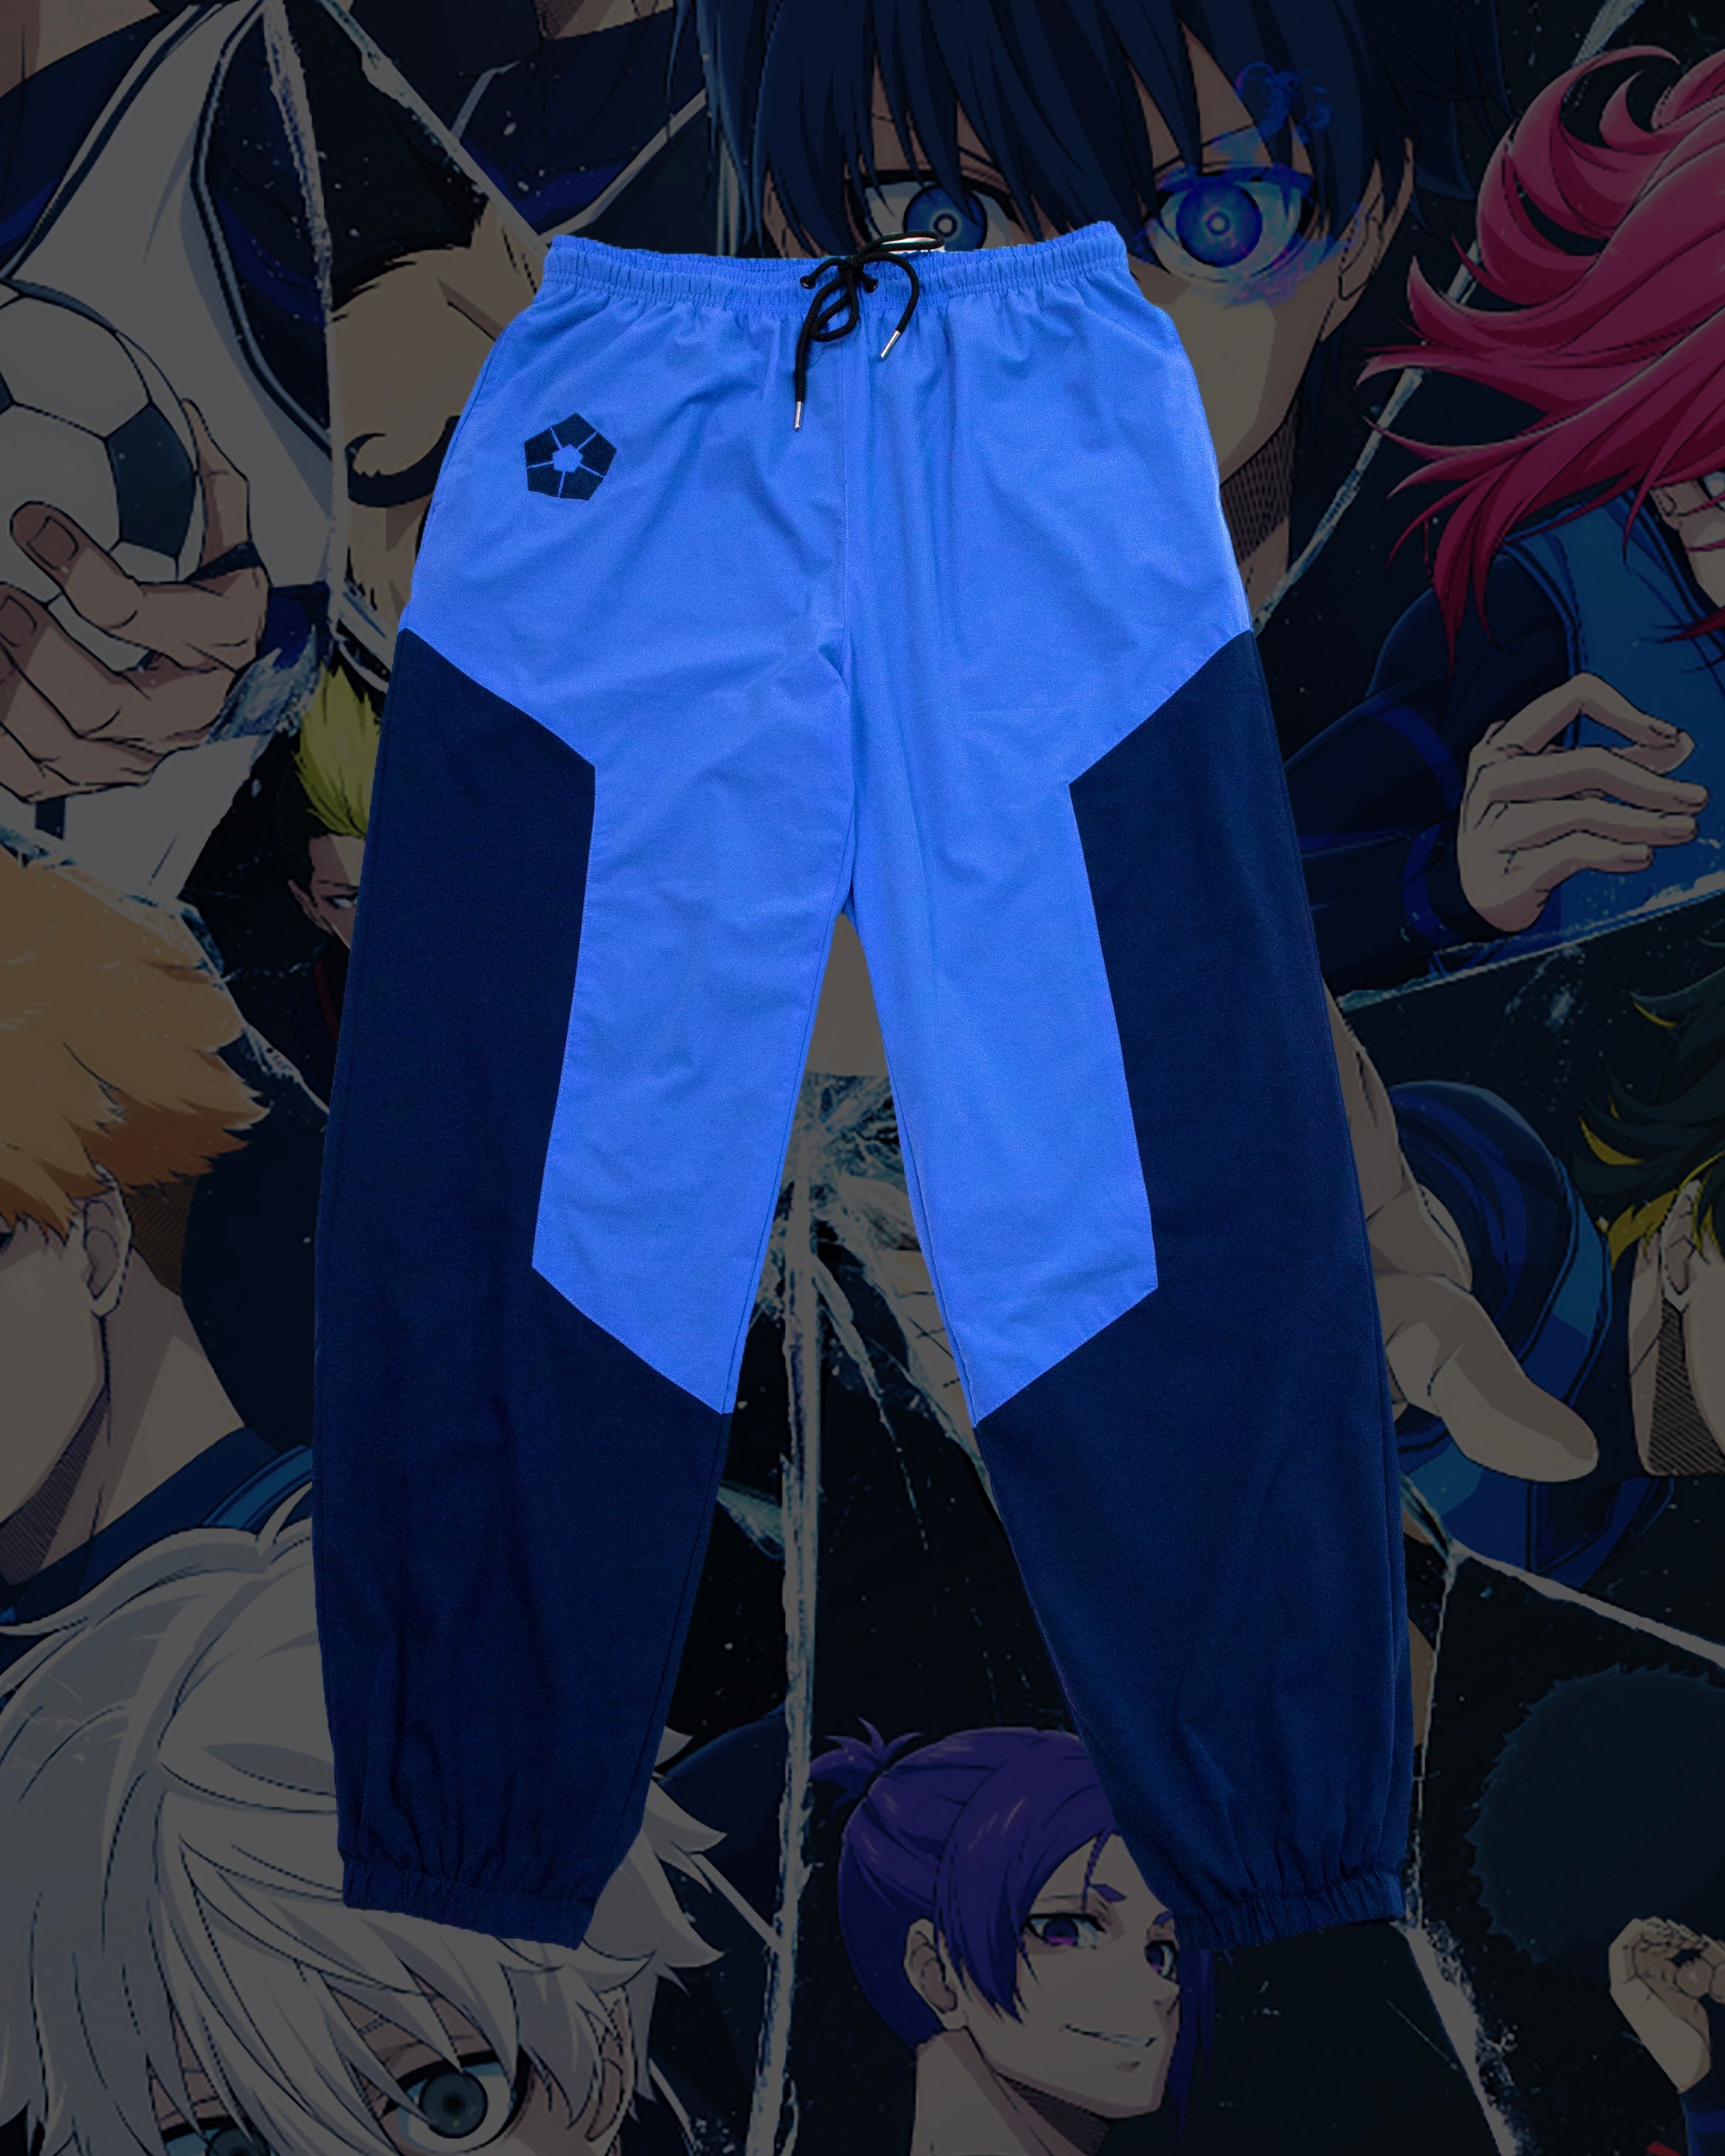 Buy Blue Track Pants for Men by DUKE Online | Ajio.com